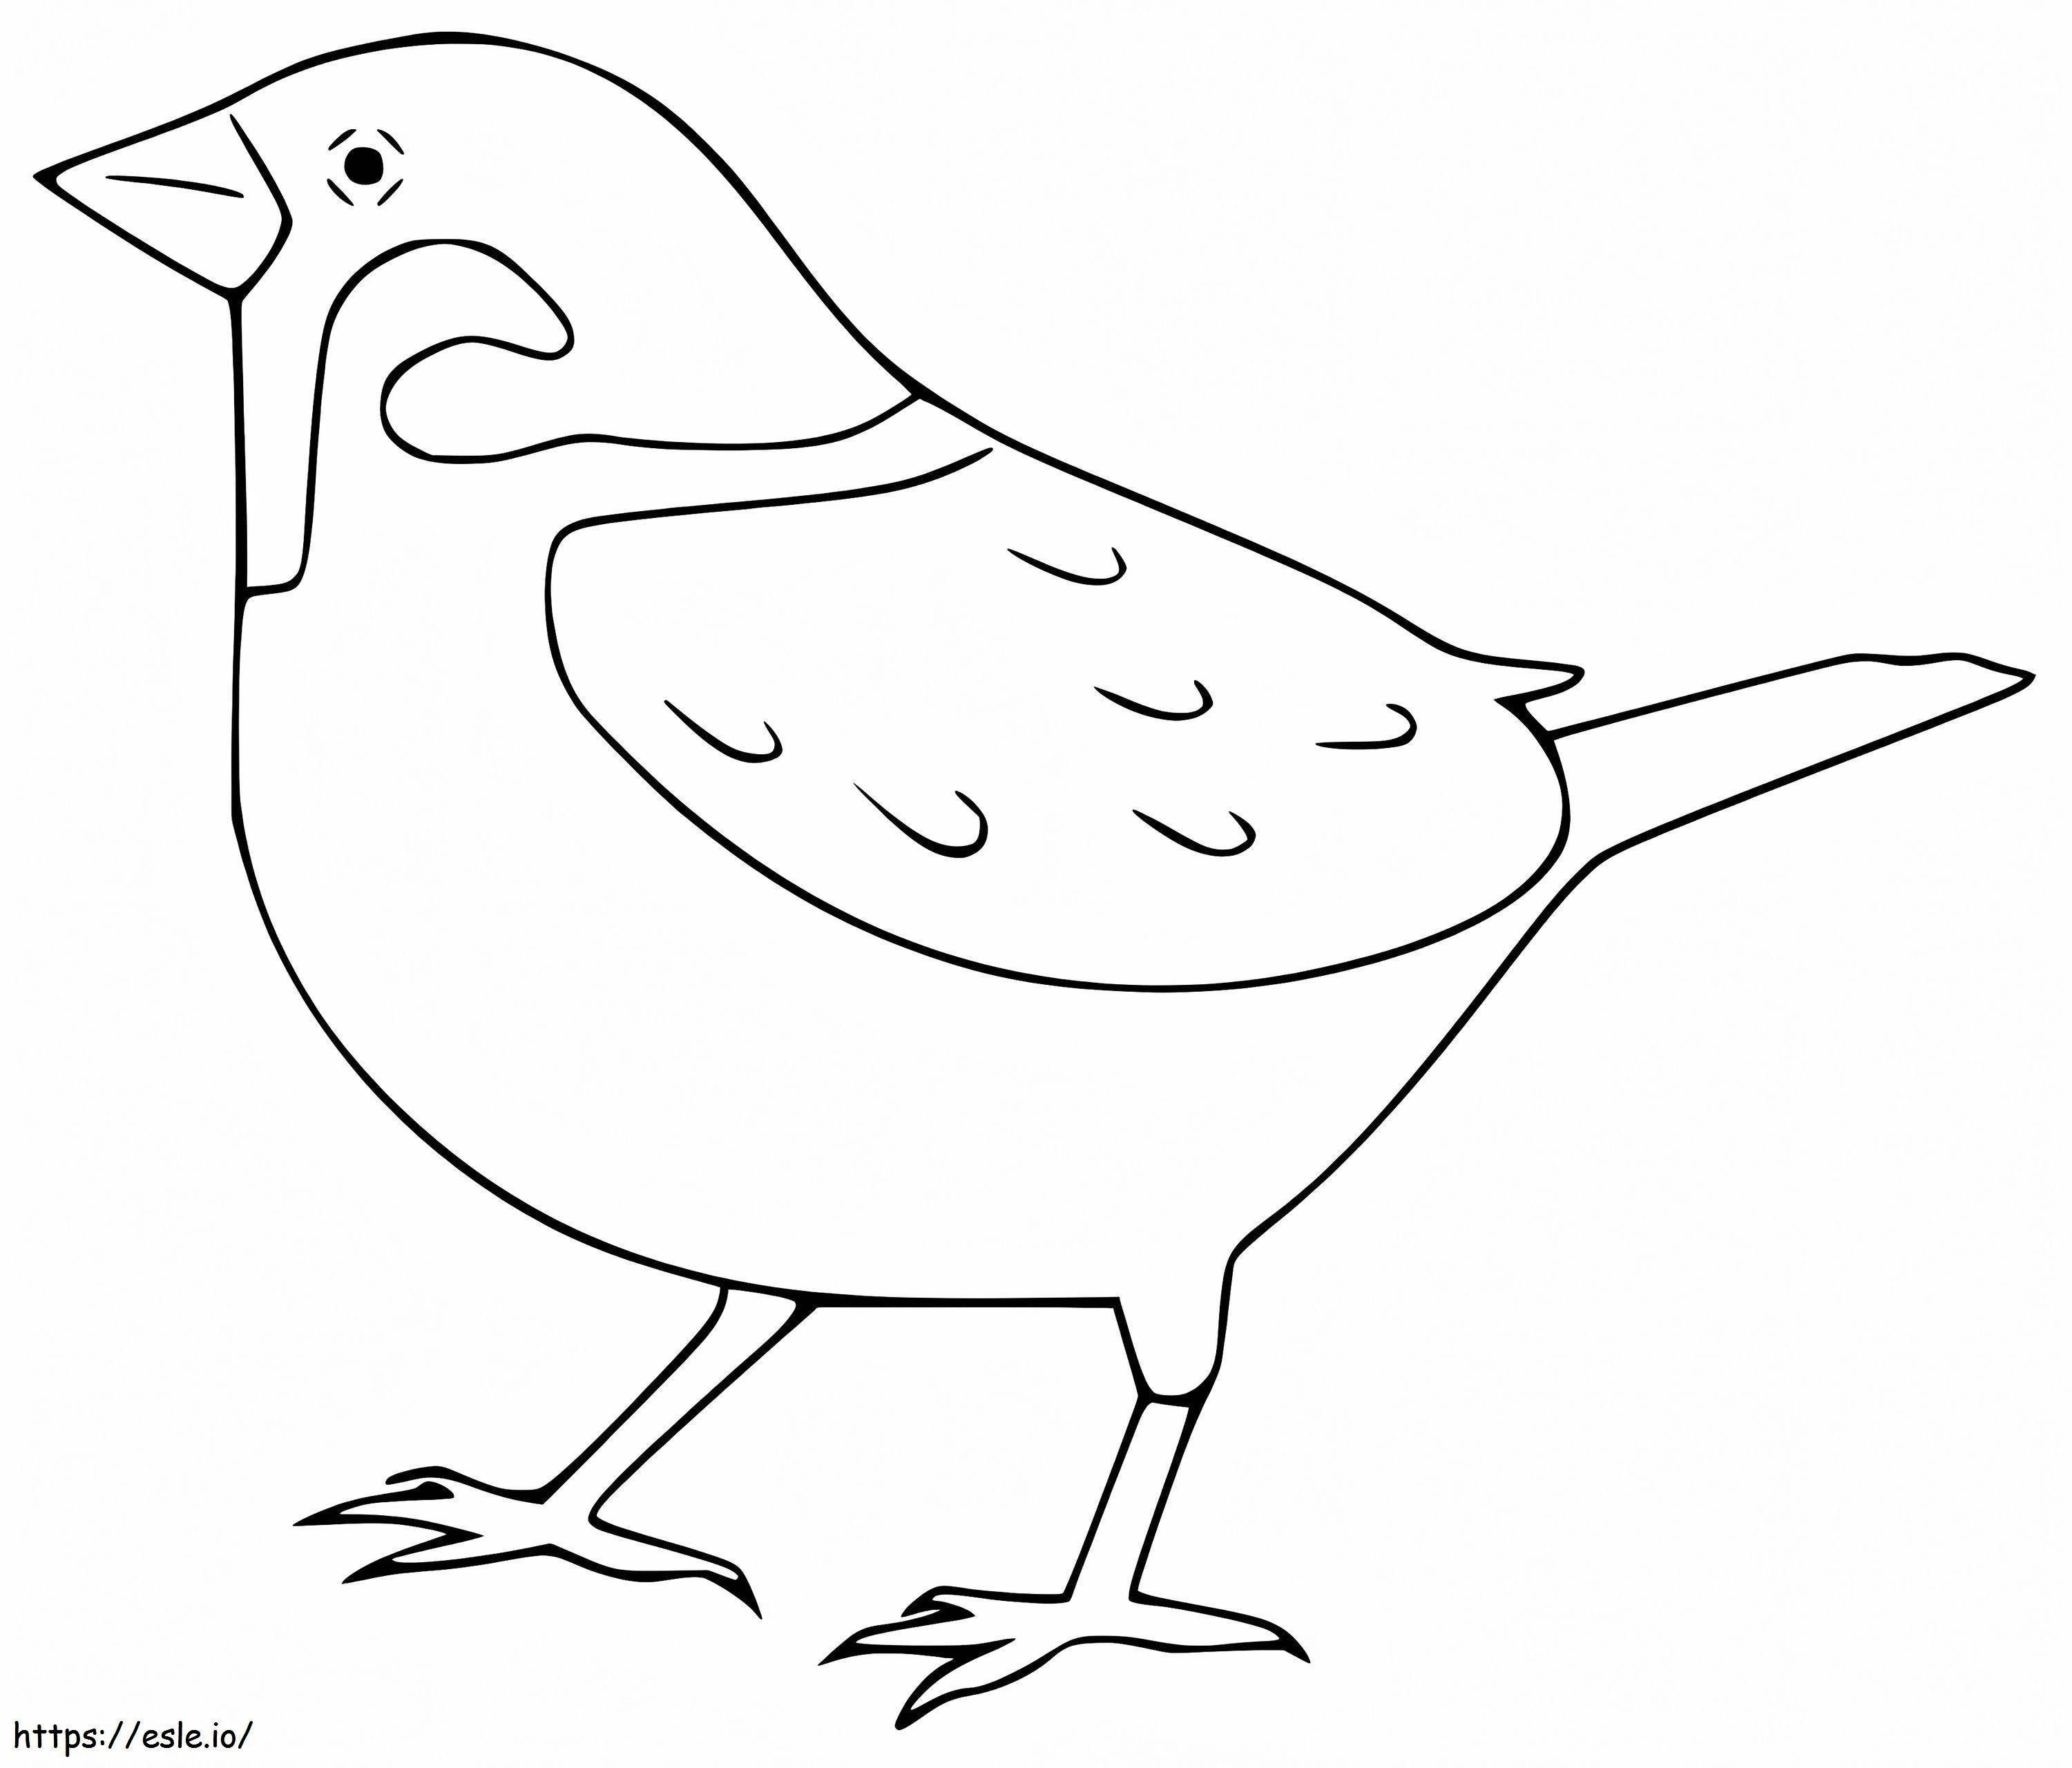 Easy Sparrow coloring page